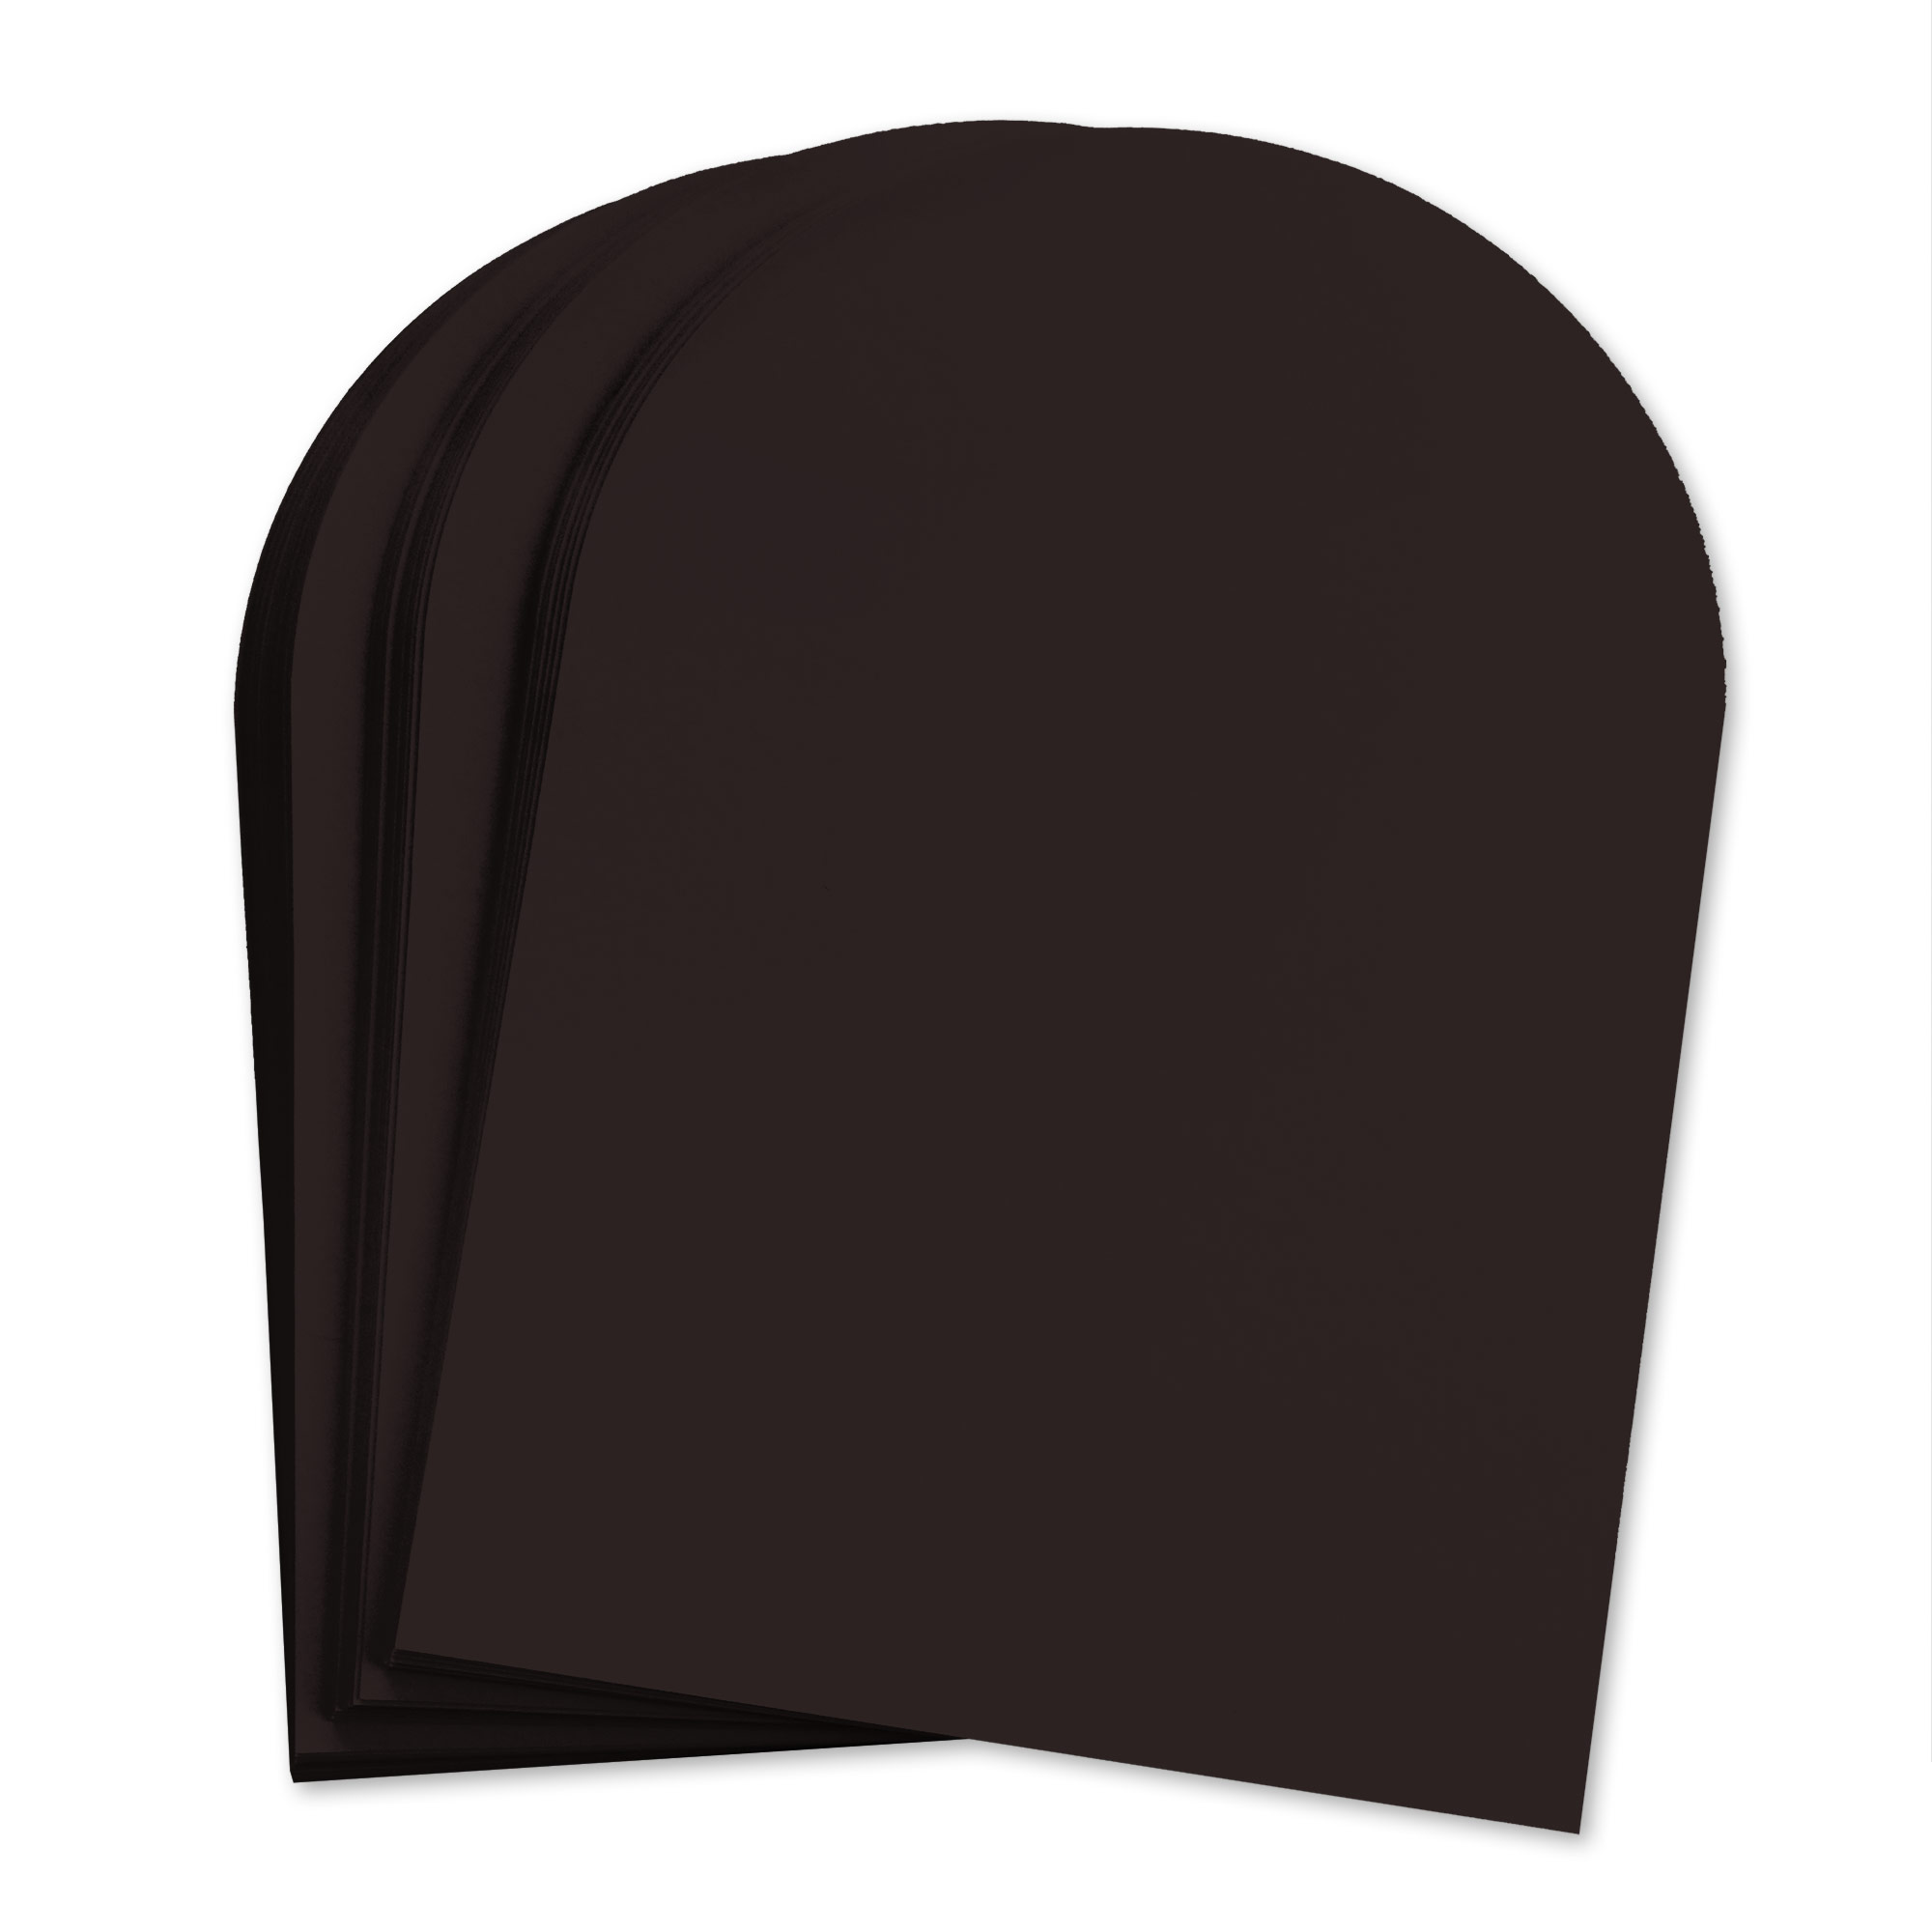 Ebony Black Arch Shaped Card - A2 Gmund Colors Matt 4 1/4 x 5 1/2 111C